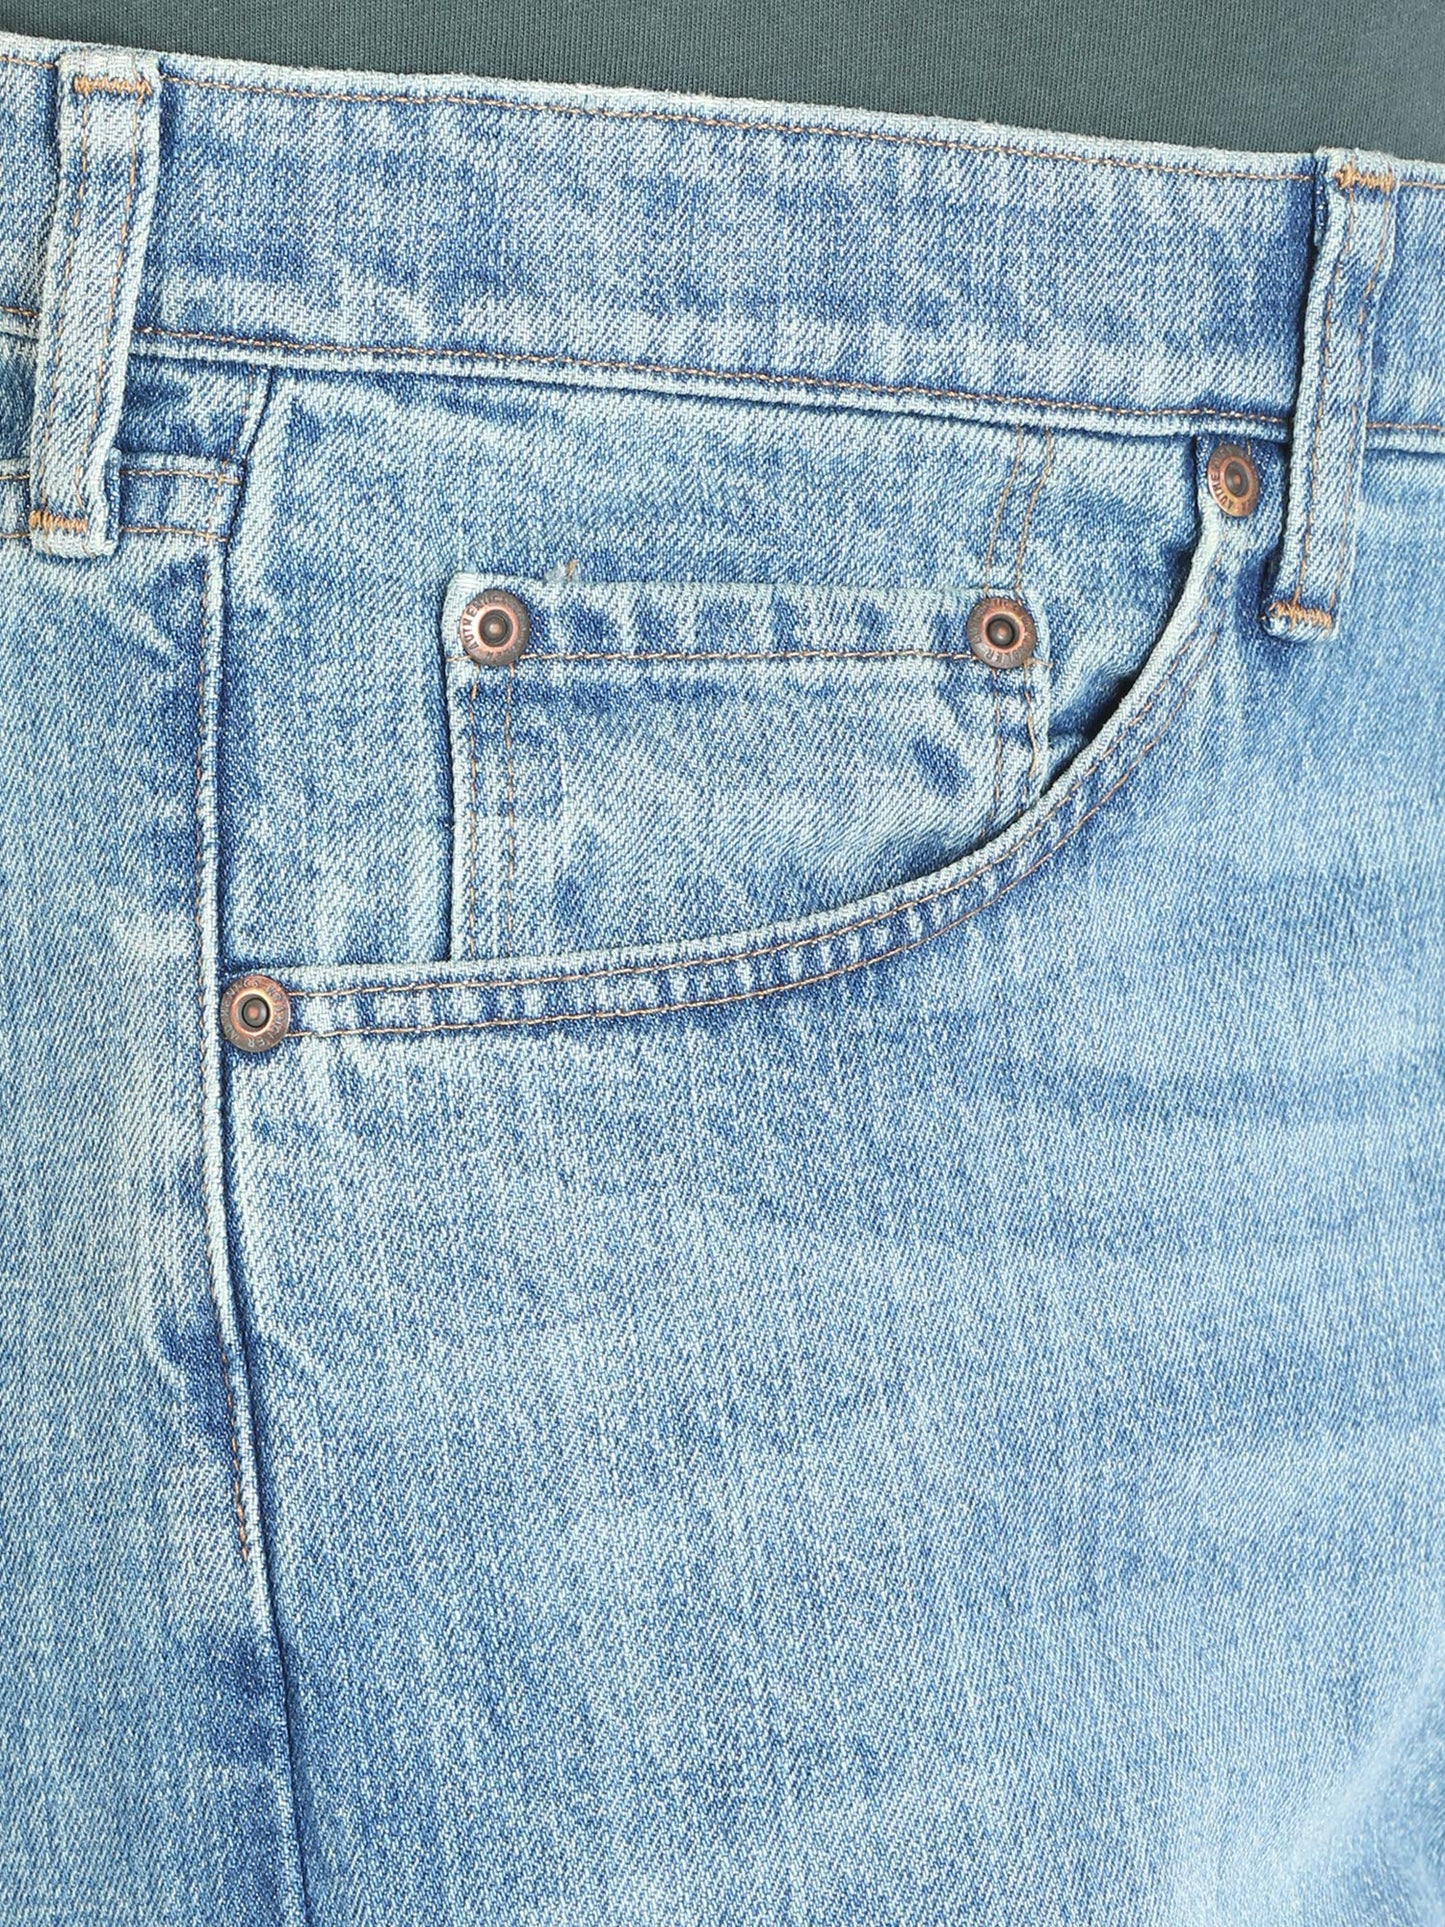 Wrangler Authentics Men's Regular Fit Comfort Flex Waist Jean, Chalk Blue, 38W x 32L